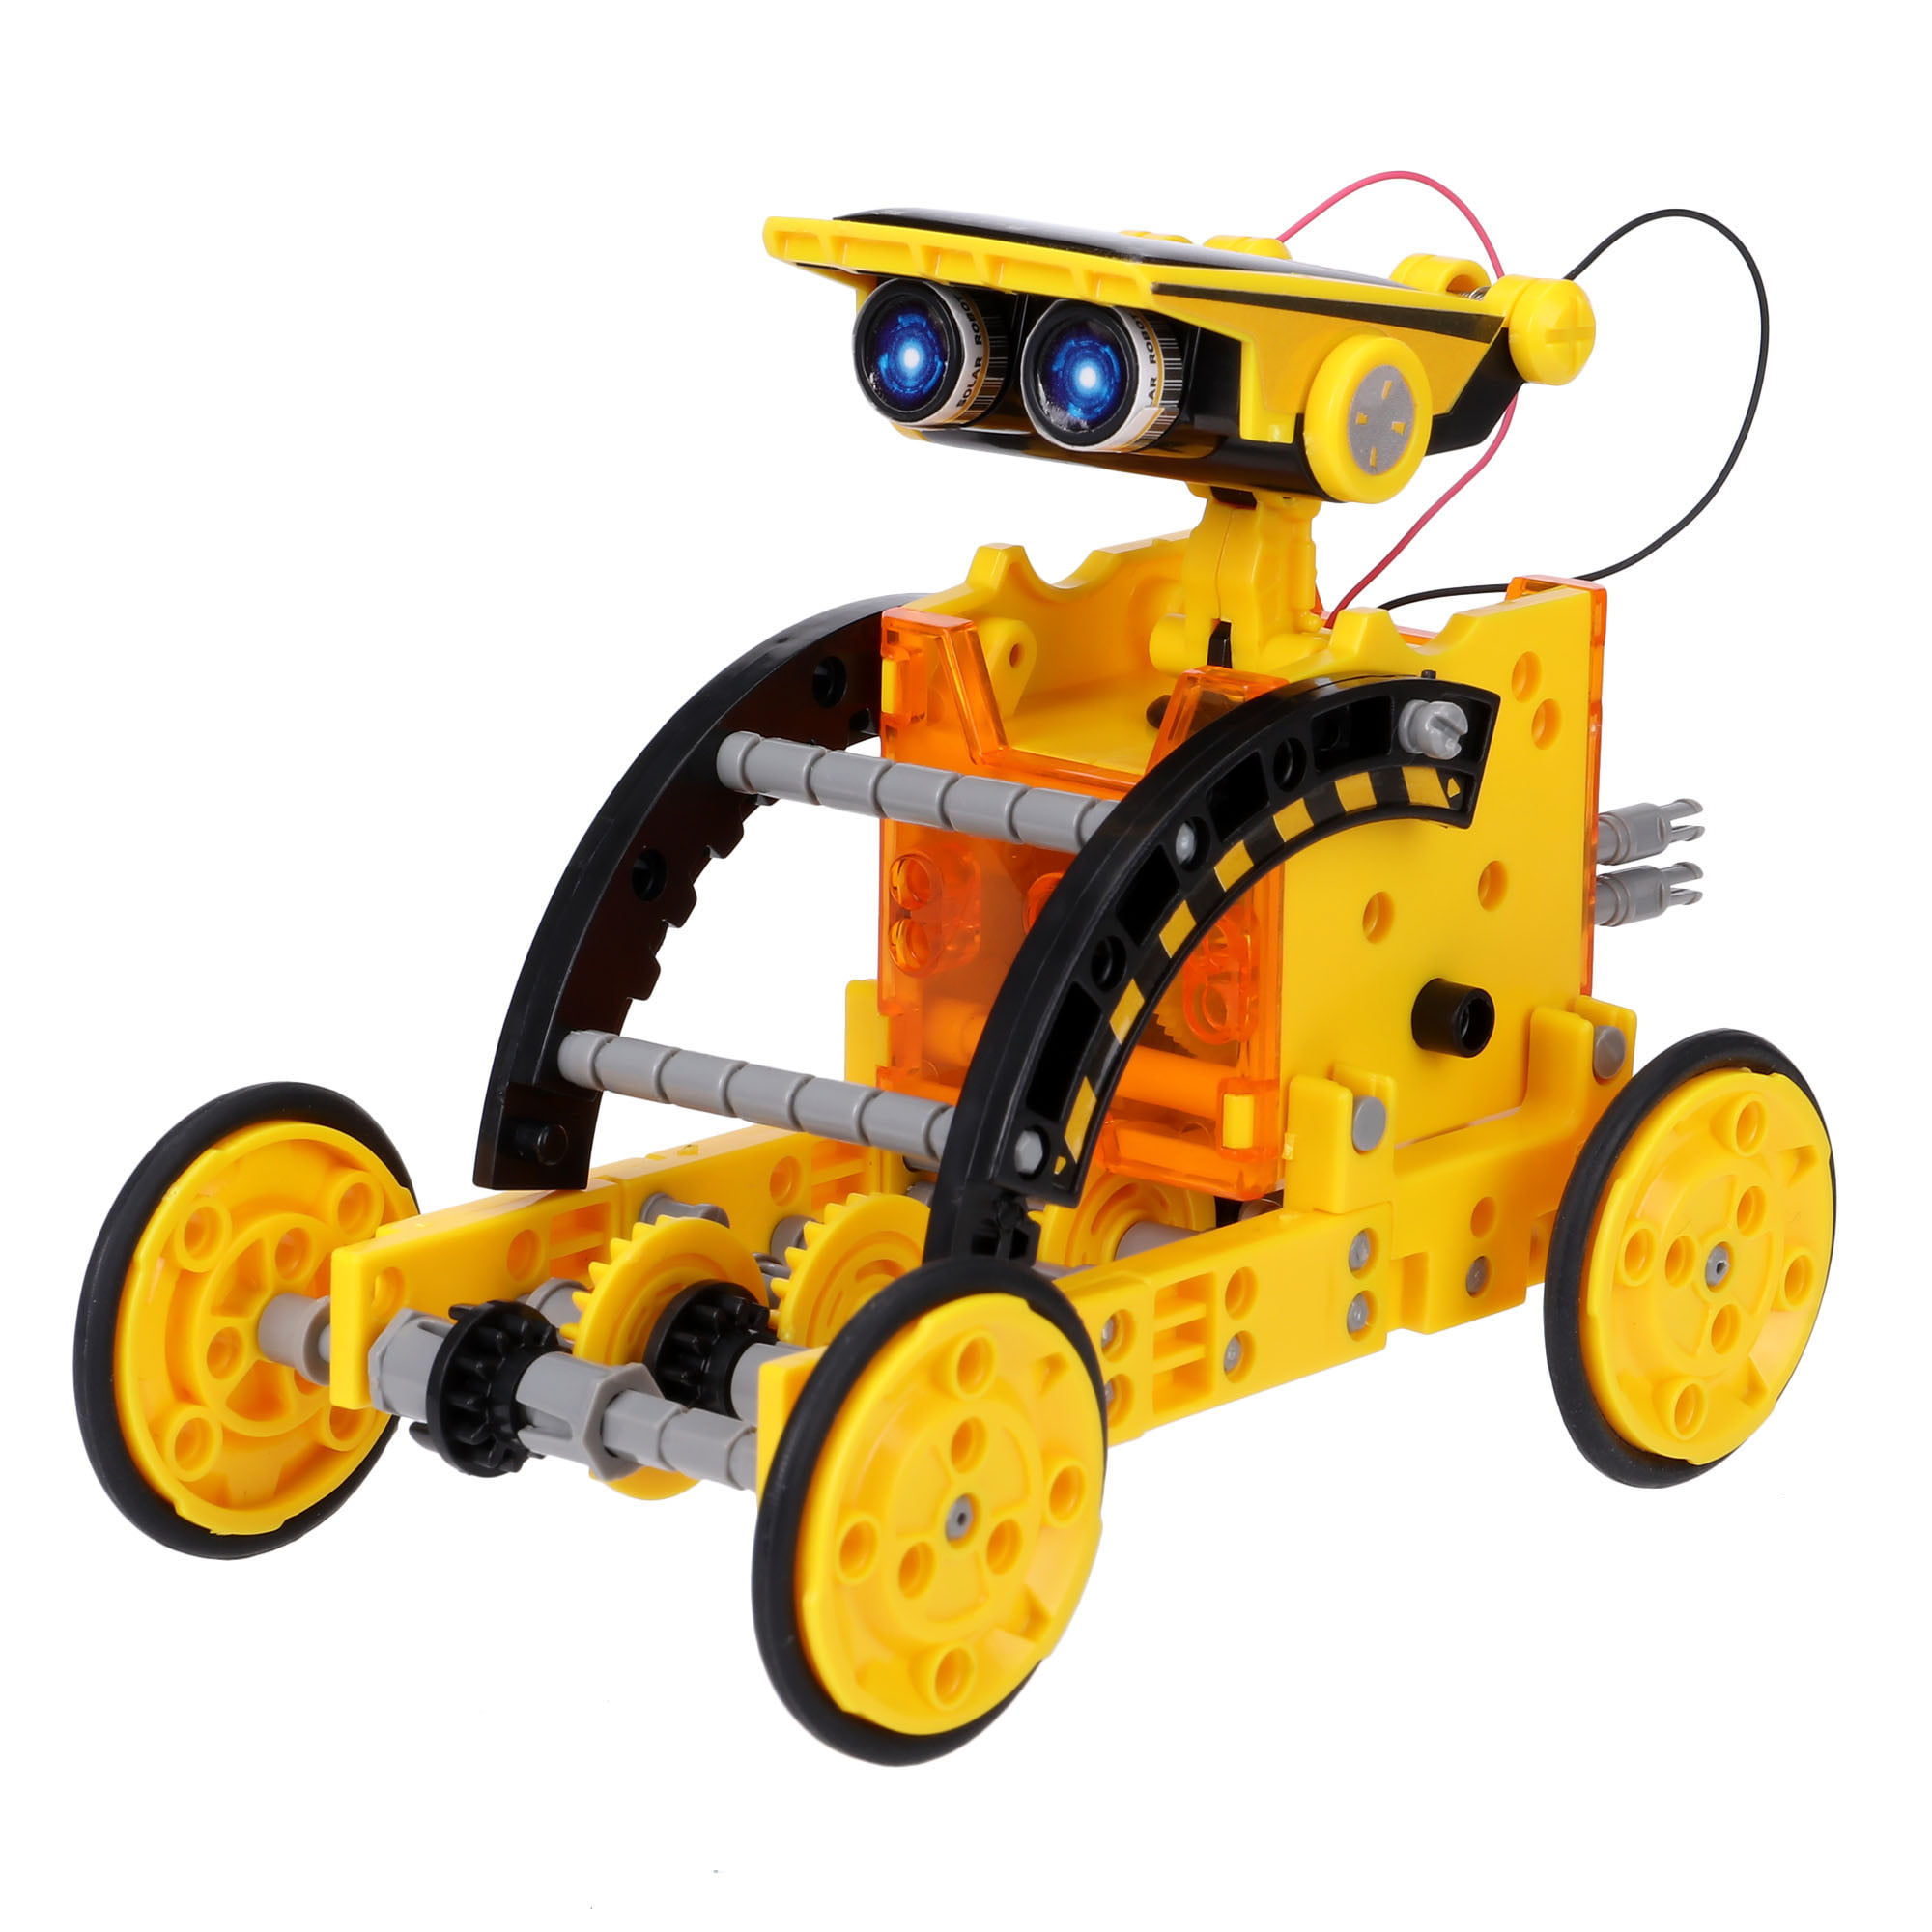 Gili Building Toys for Kids Ages 8-12(Bulldozer & Tank), Stem Toys